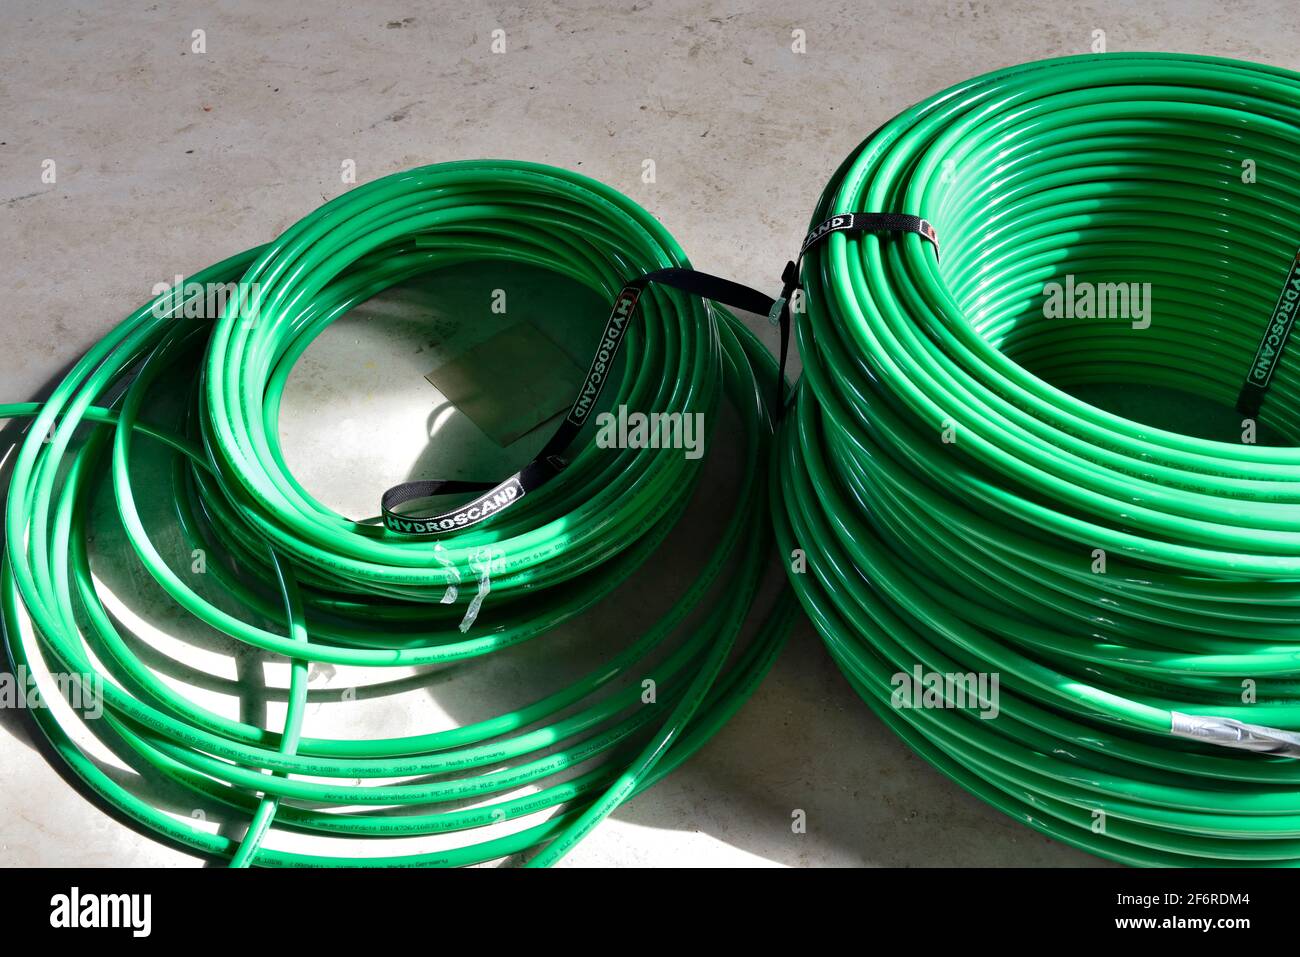 Spulen aus grünem Kunststoff Fußbodenheizung Rohr Stockfotografie - Alamy